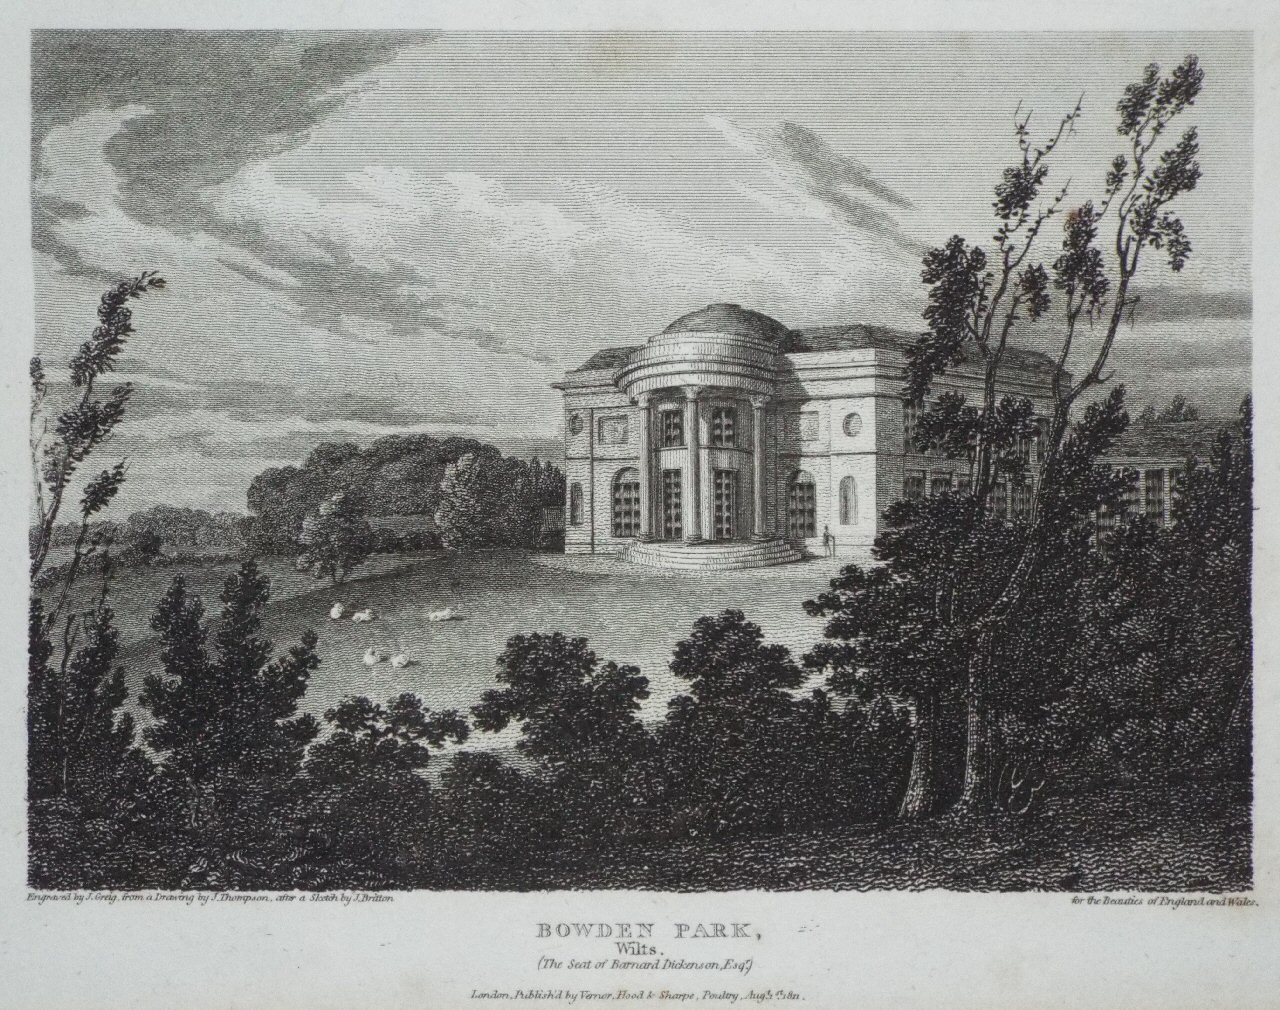 Print - Bowden Park, Wilts. (The Seat of Barnard Dickenson Esqr.) - Greig